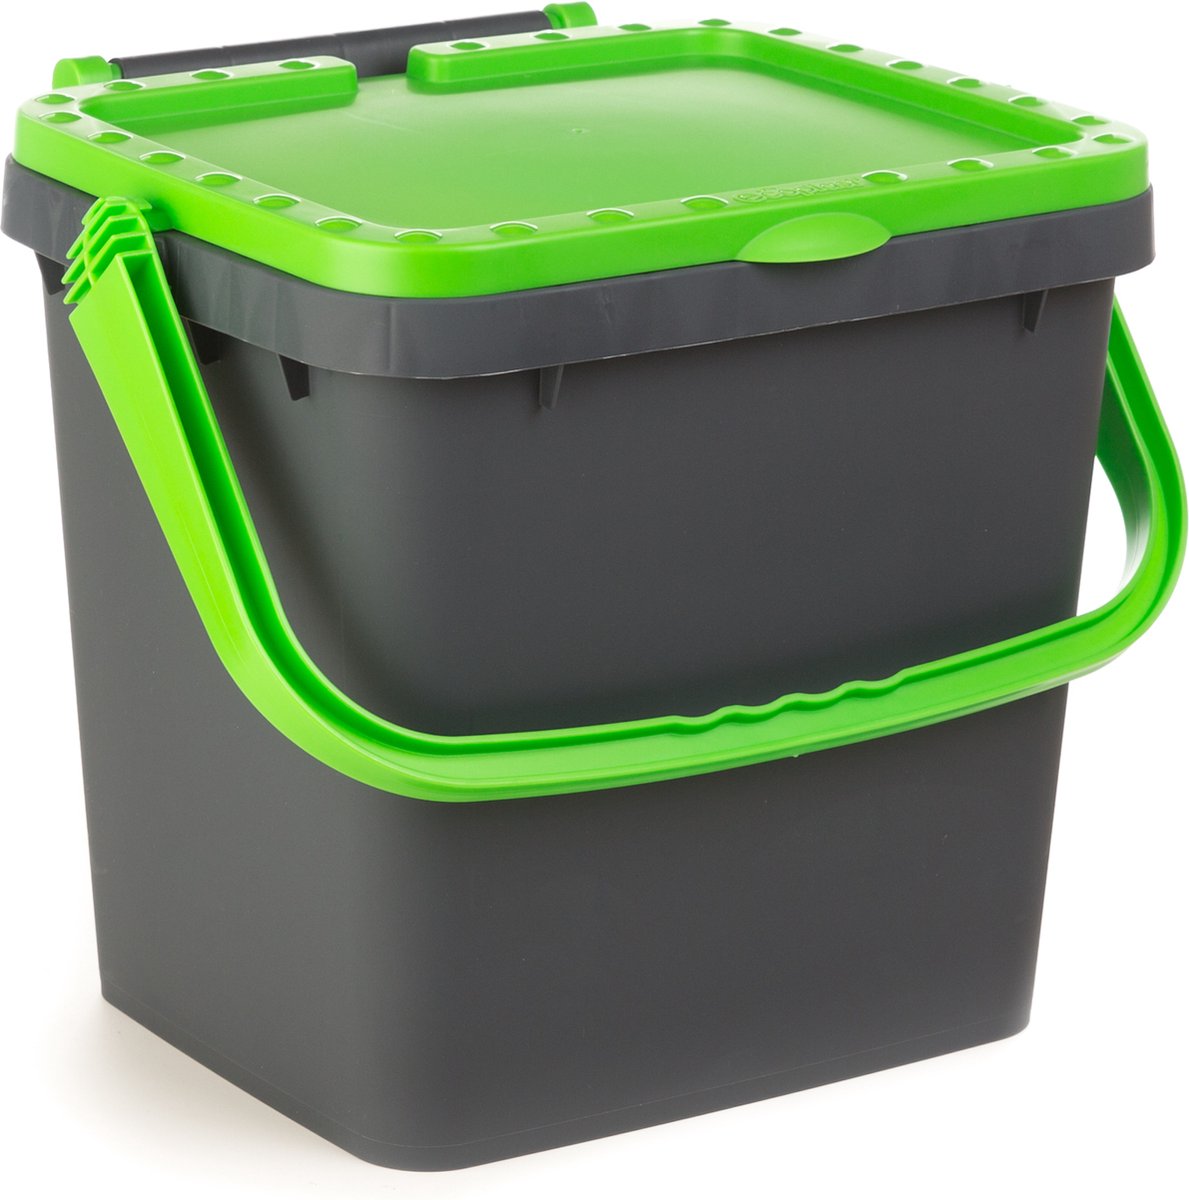 Ecoplus 30 liter afvalemmer groen - afvalscheidingsbak - sorteerbak - afvalbak